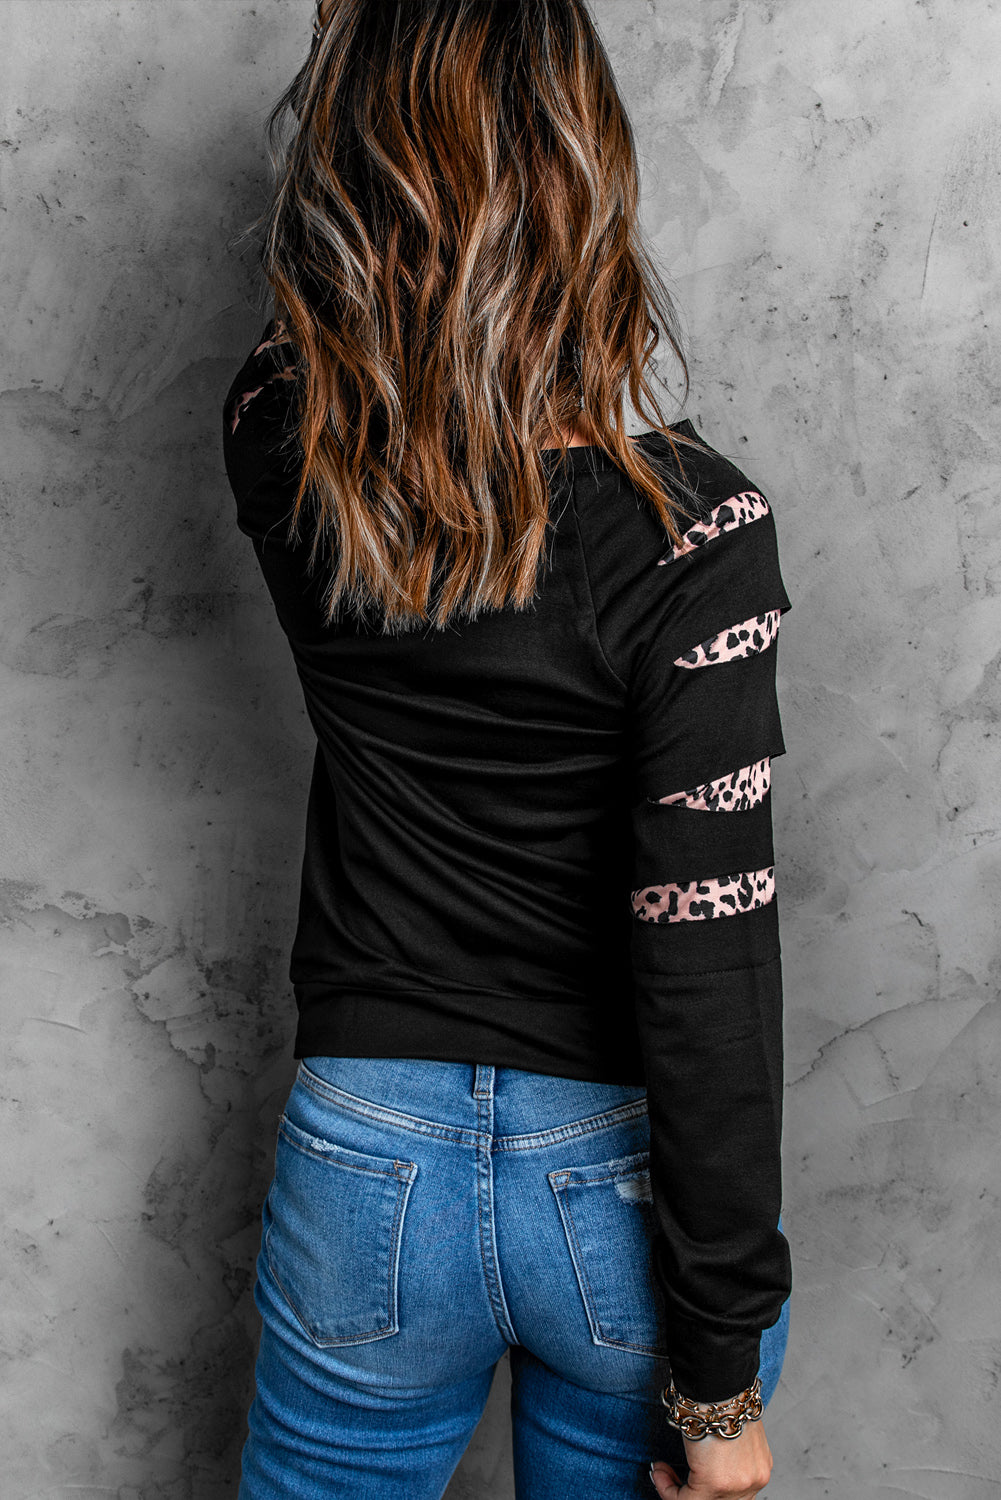 Black Cow Cactus Graphic Print Contrast Long Sleeve Sweatshirt Graphic Sweatshirts JT's Designer Fashion